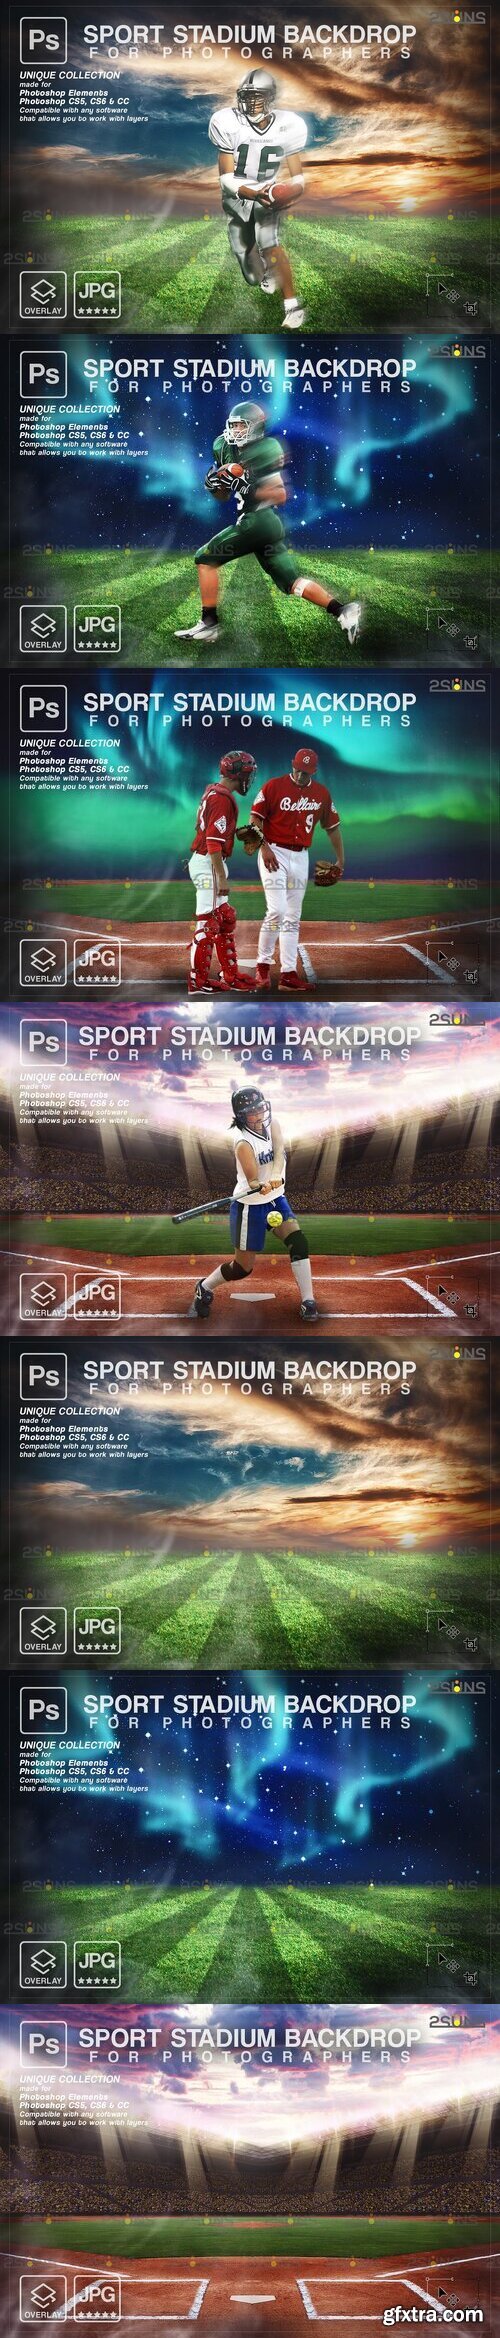 Backdrop Sports Digital